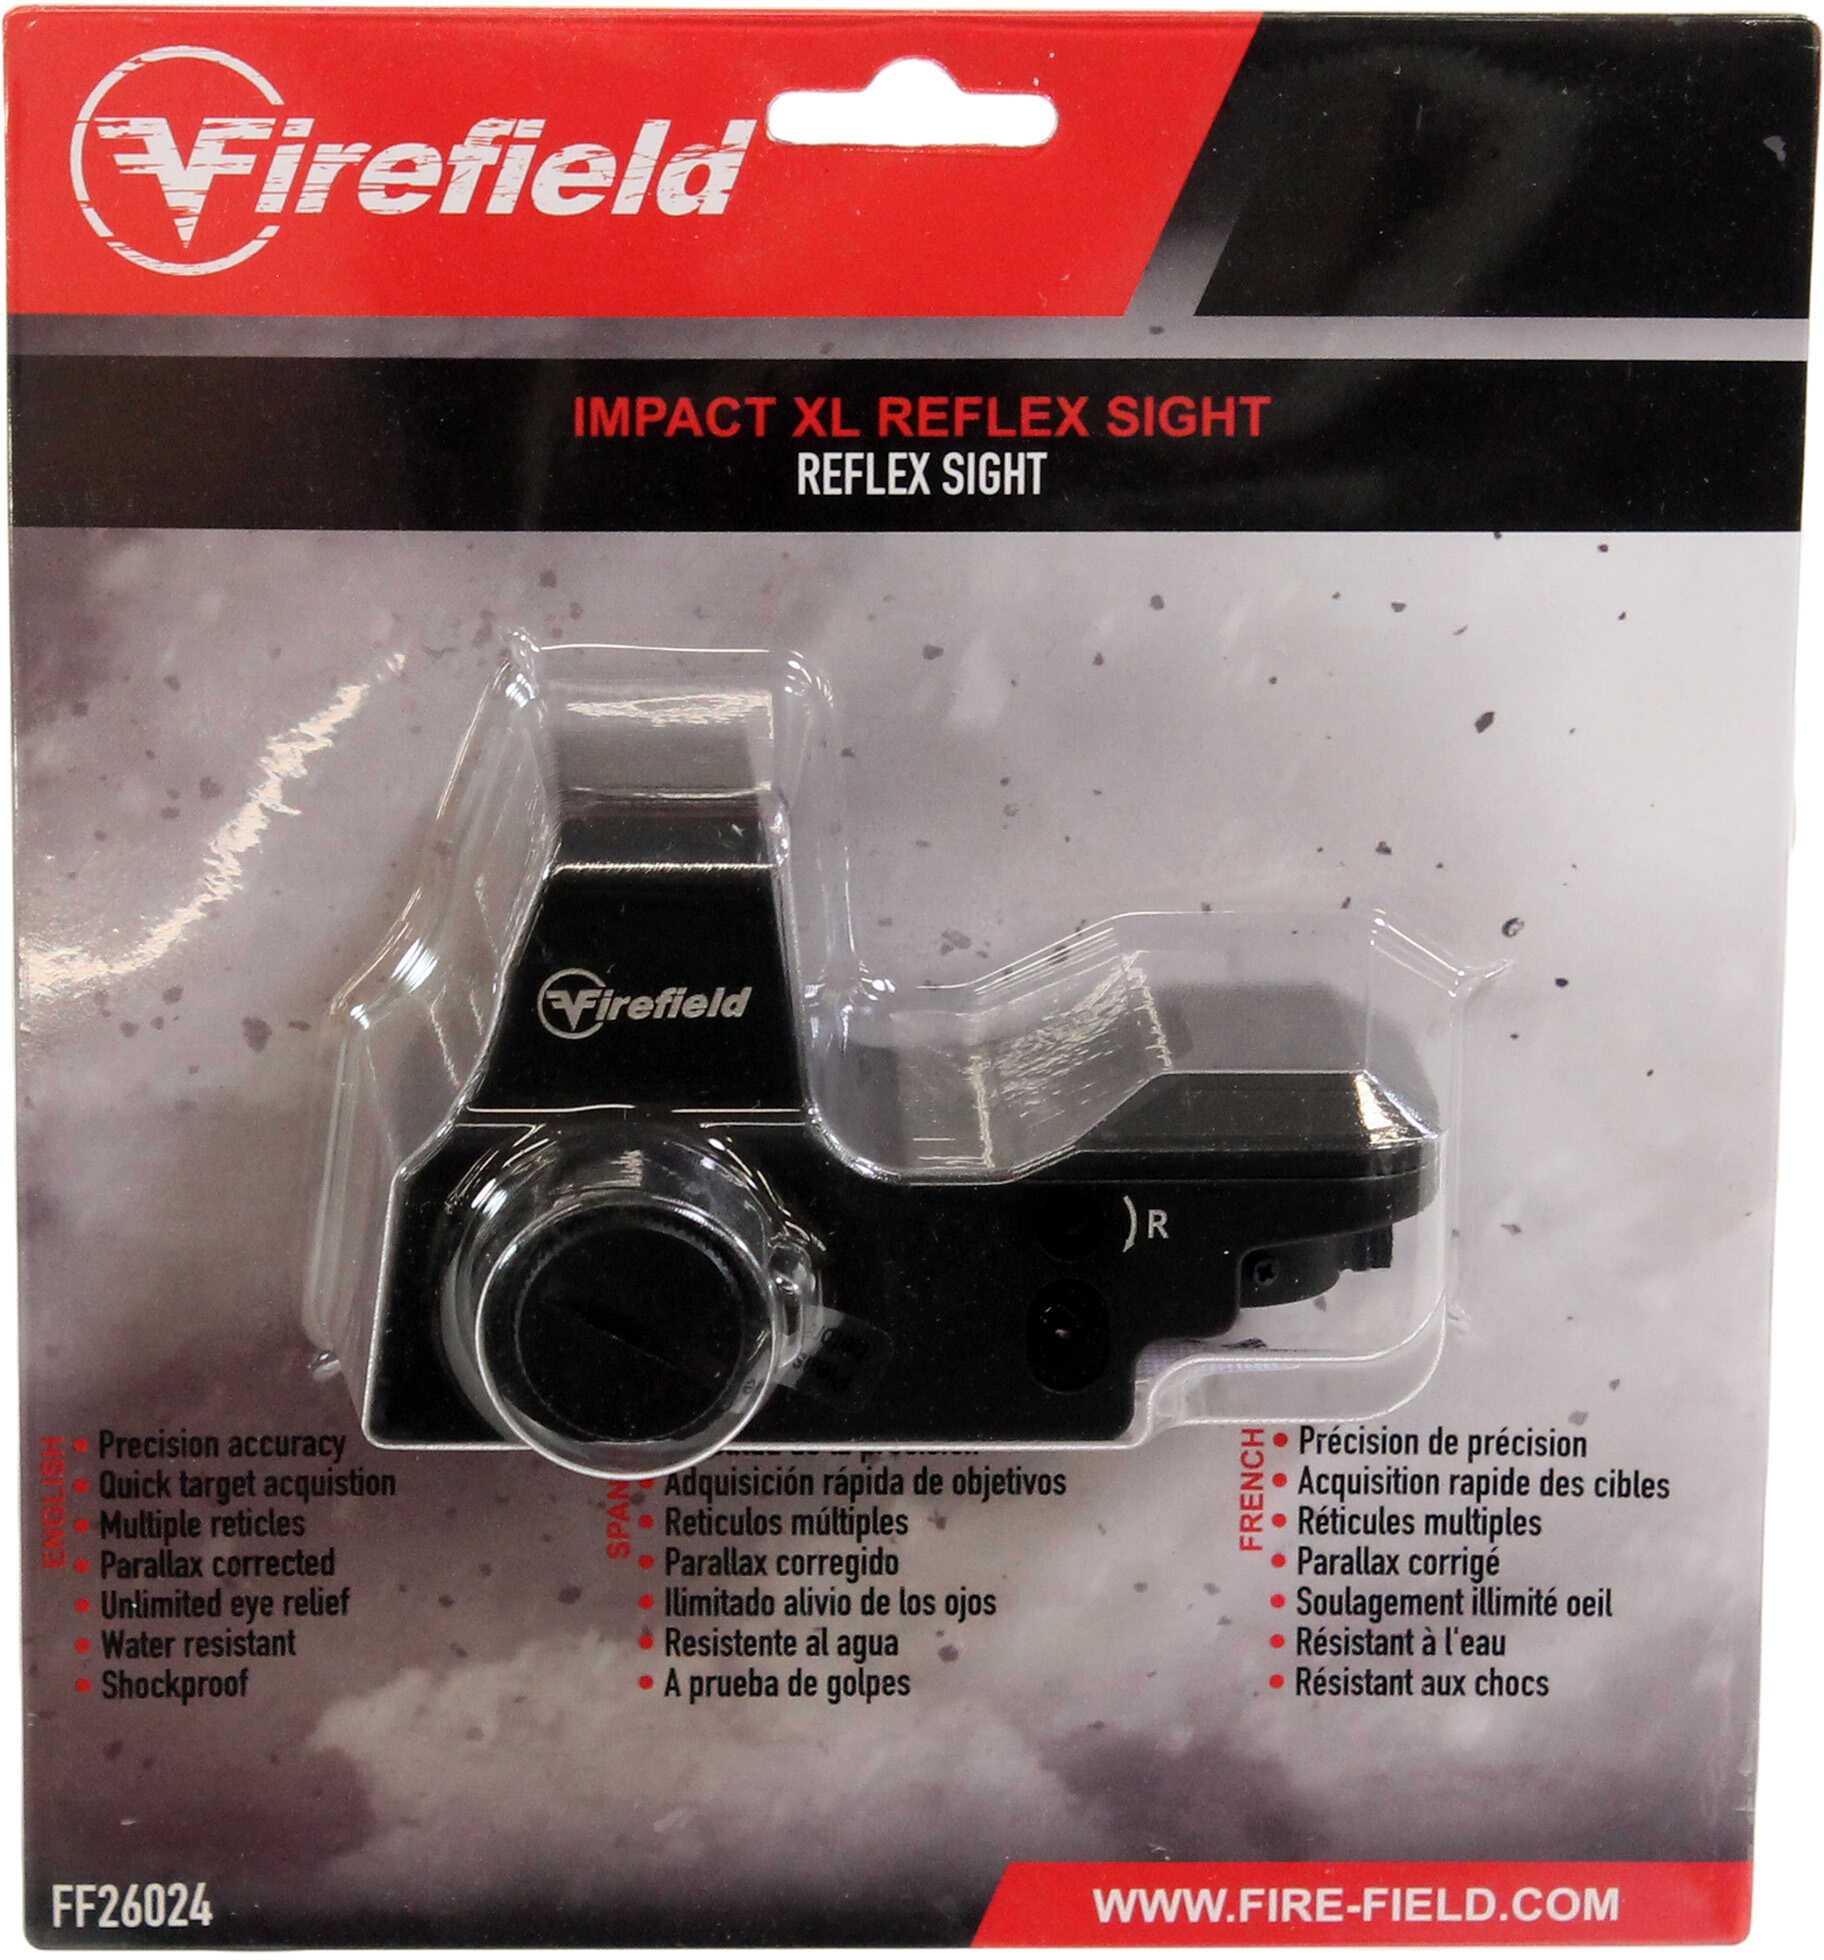 Sellmark Firefield Impact Xl Compact Reflex Sight